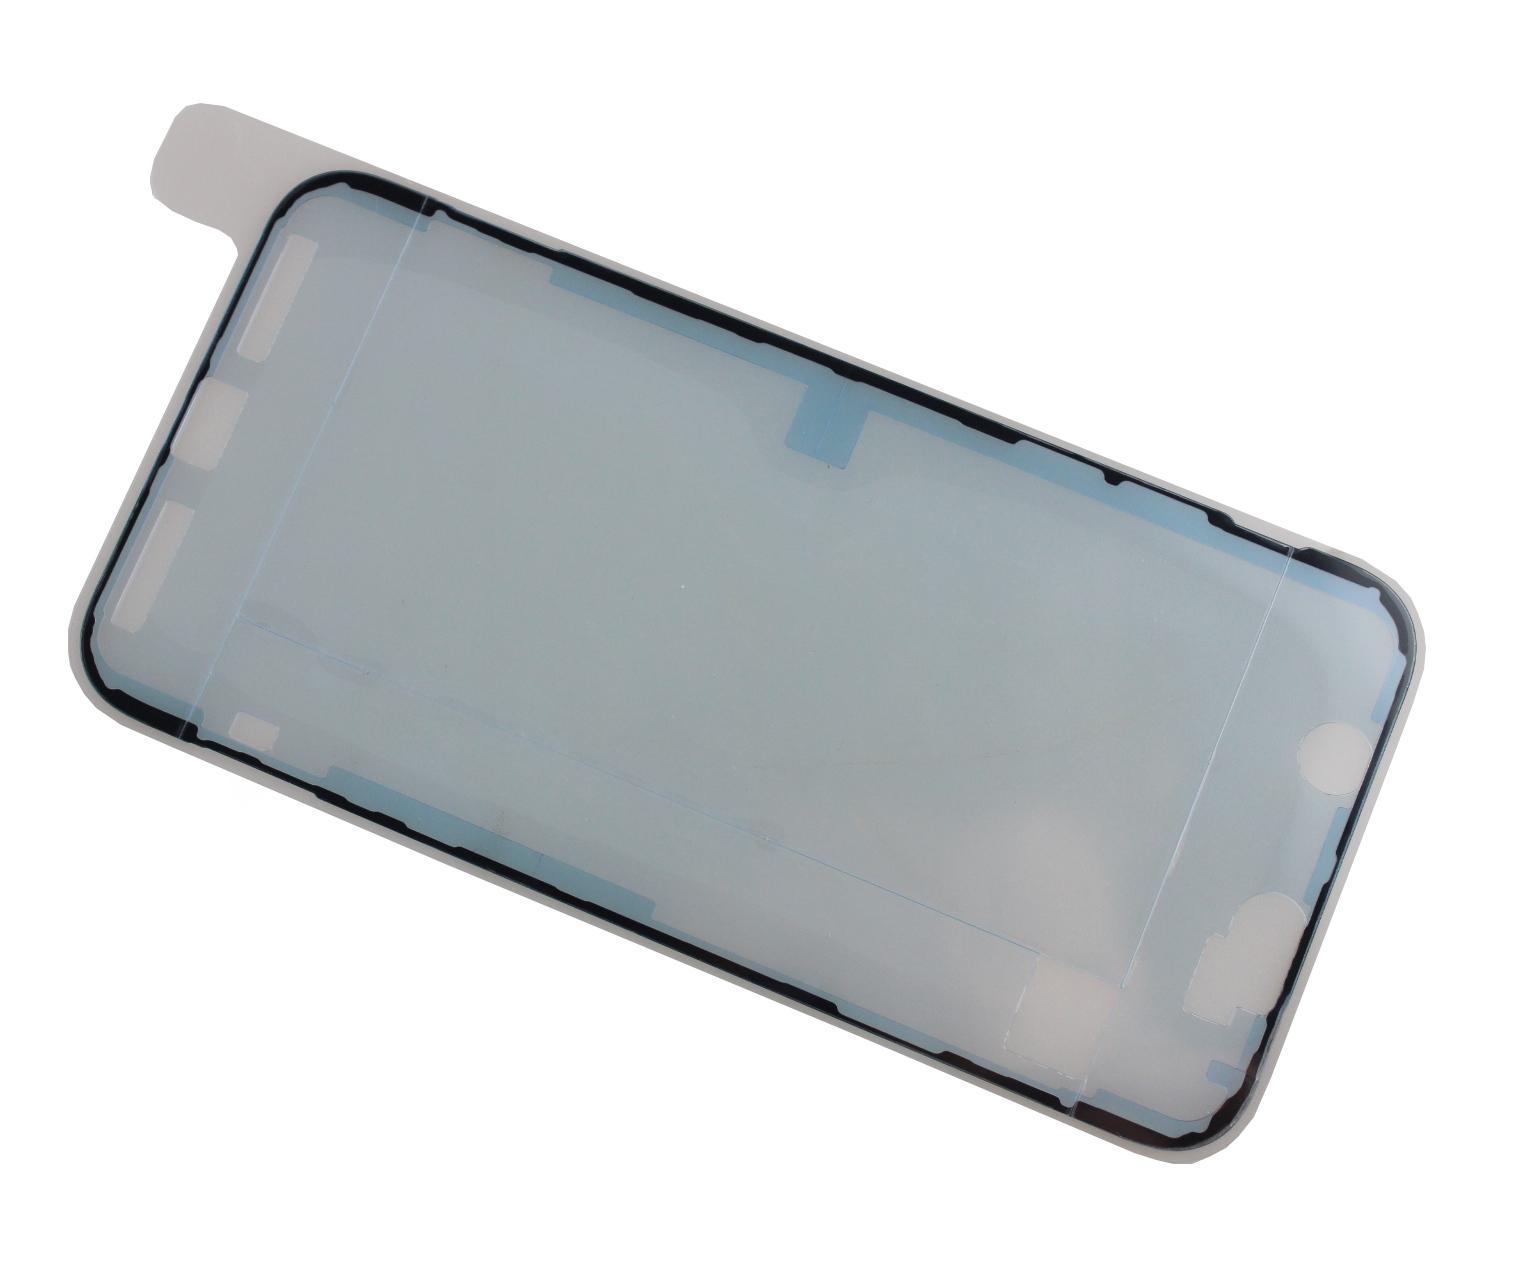 Originál montážní lepící páska LCD iPhone 11 - iPhone XR servis pack